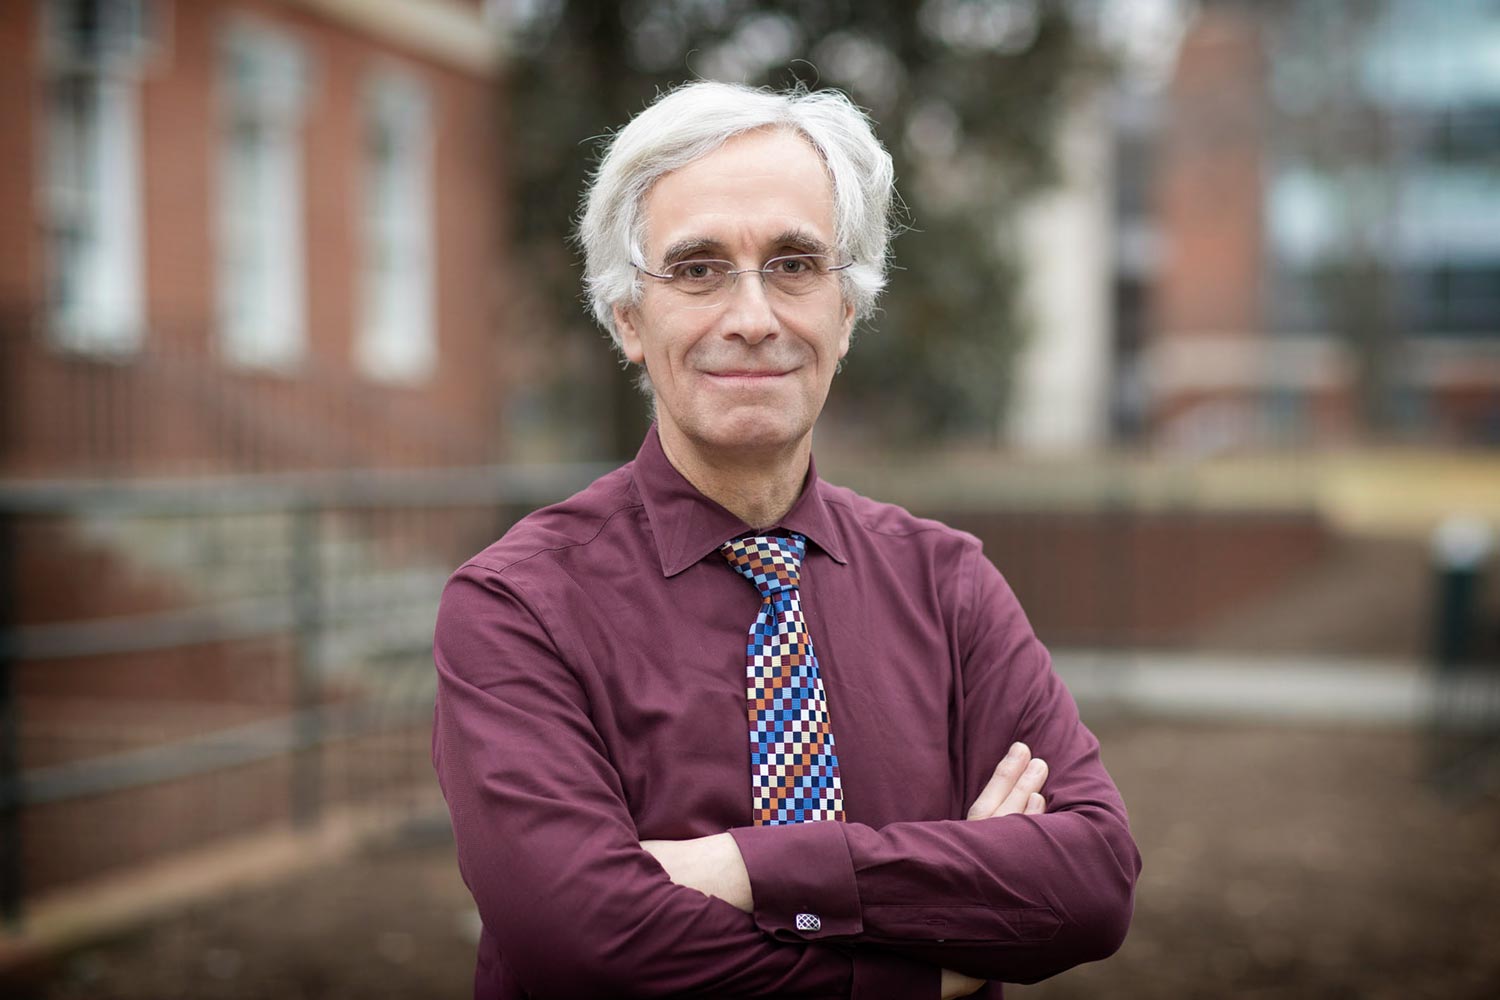 Listen Up! This UVA Professor Has Invented a Better Earplug | UVA Today